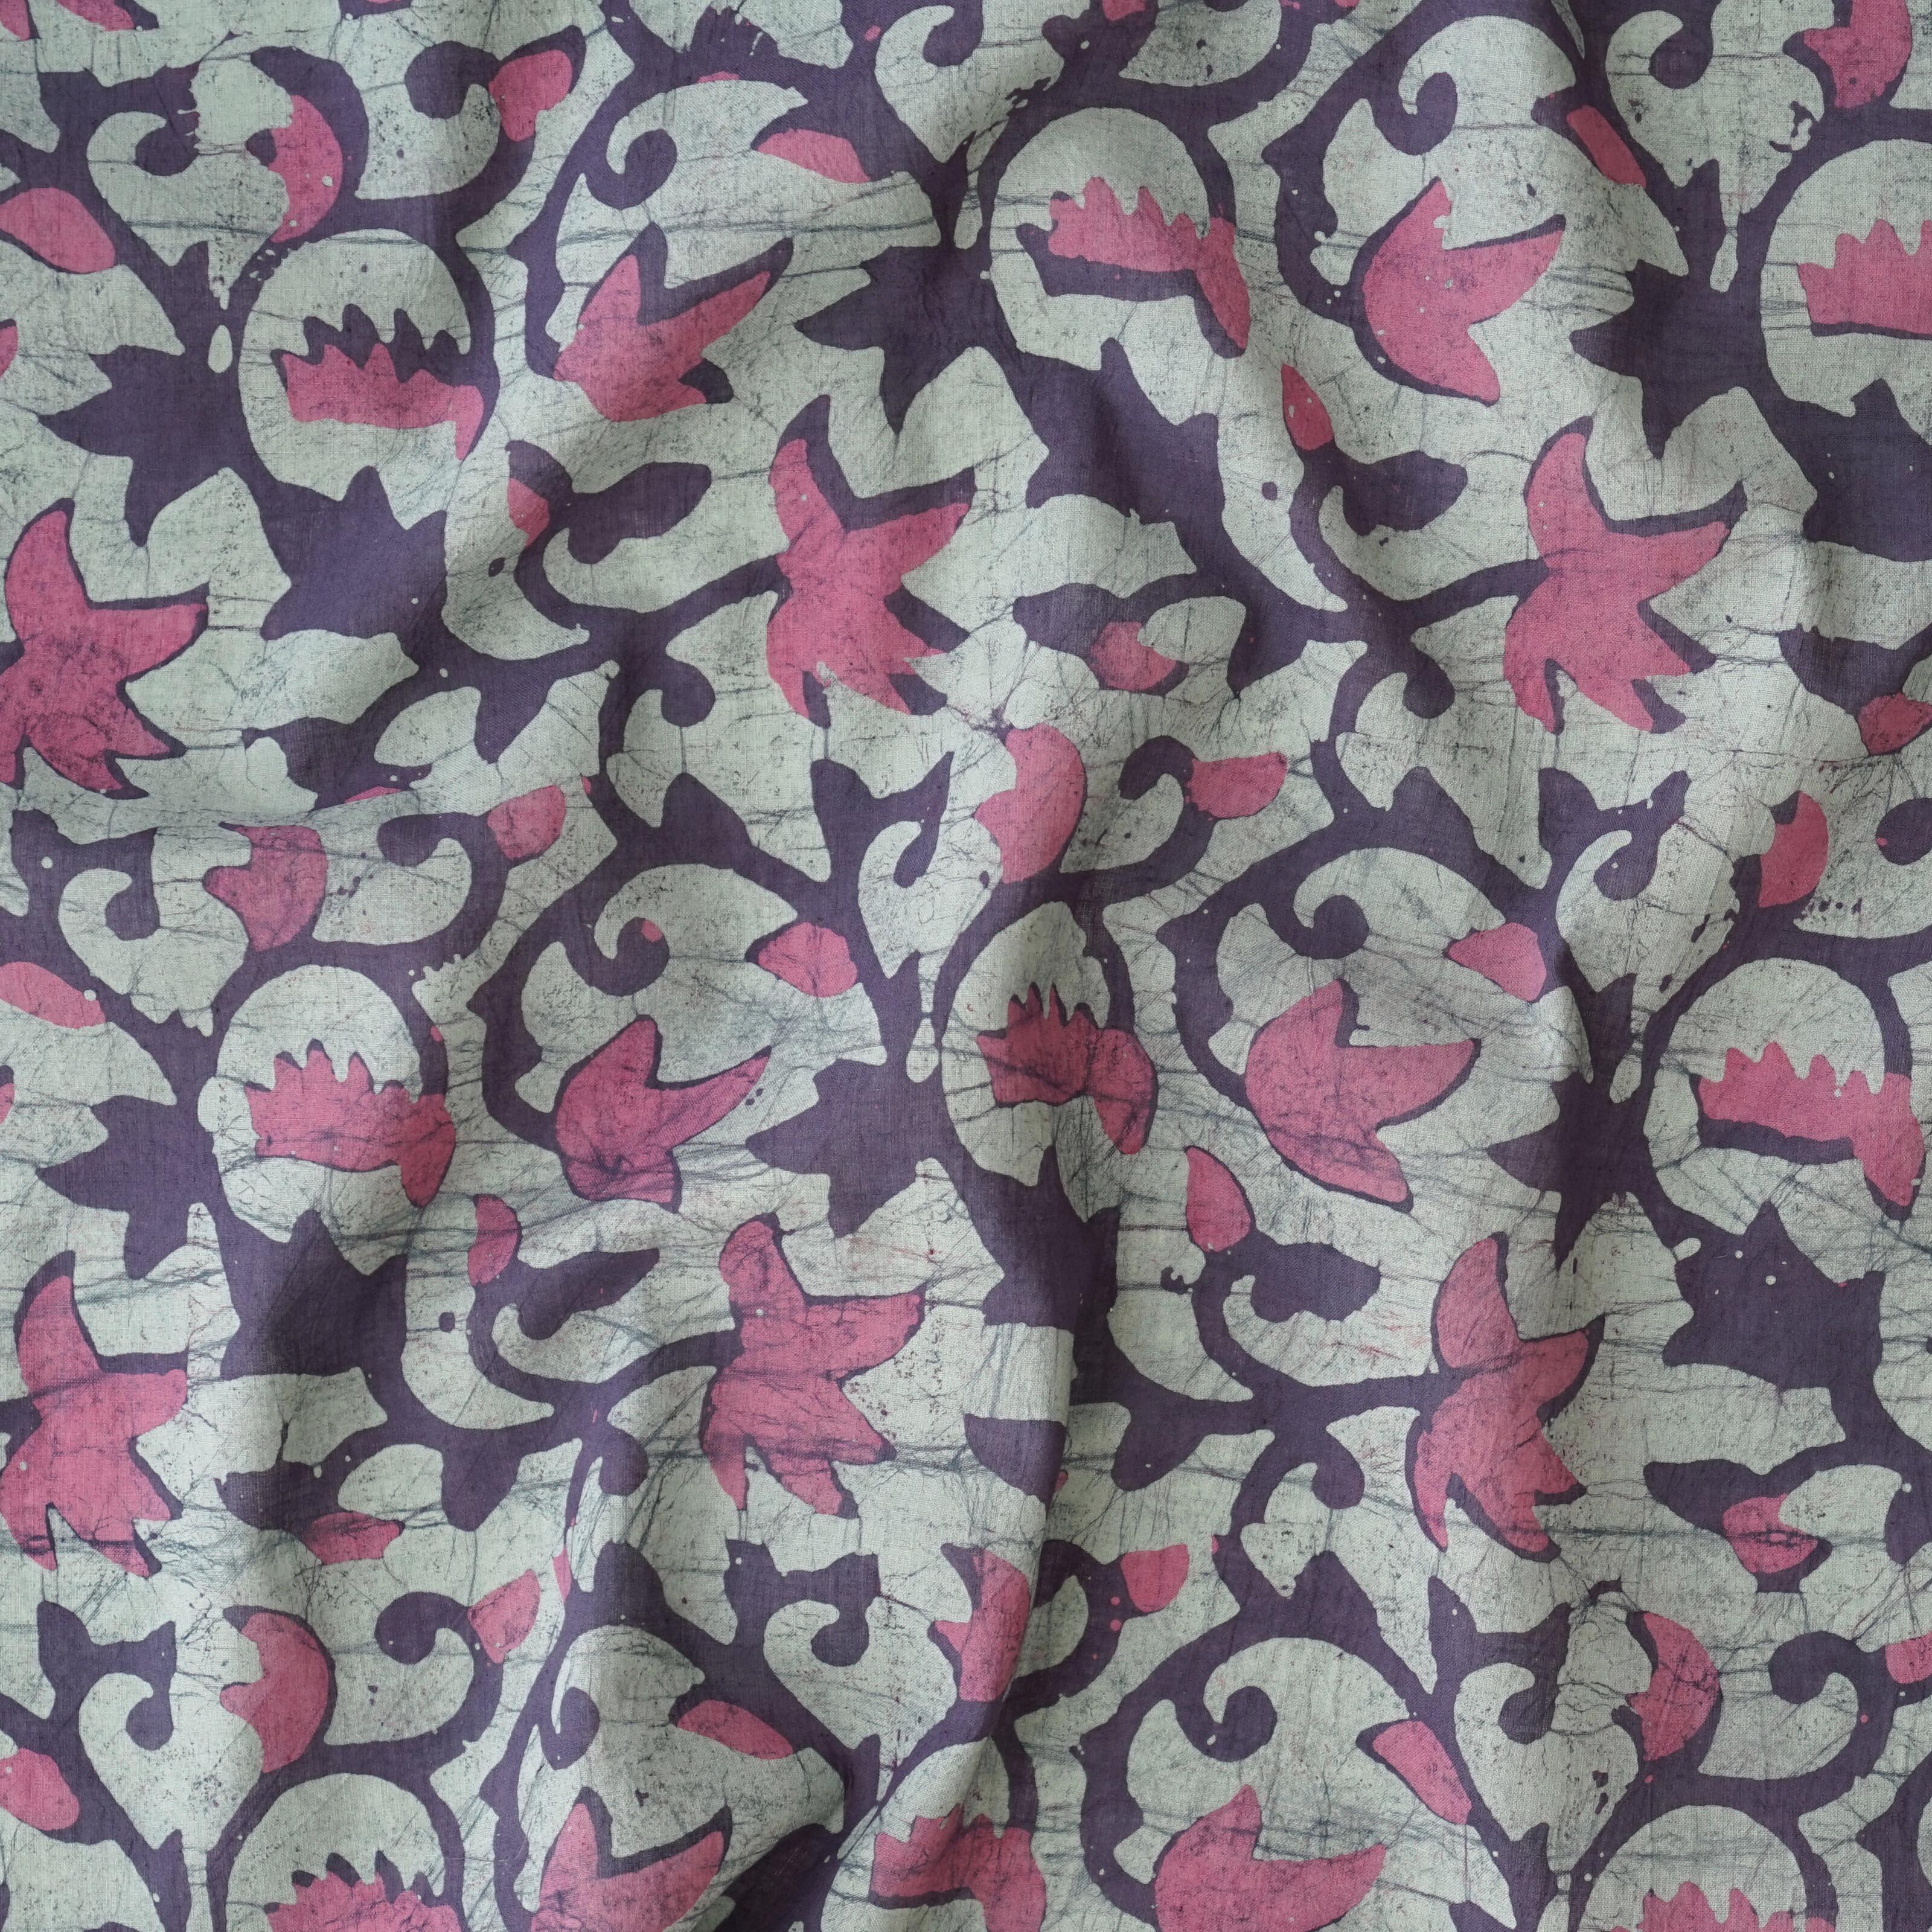 100% Block-Printed Batik Cotton Fabric From India - Fretwork Motif - Contrast